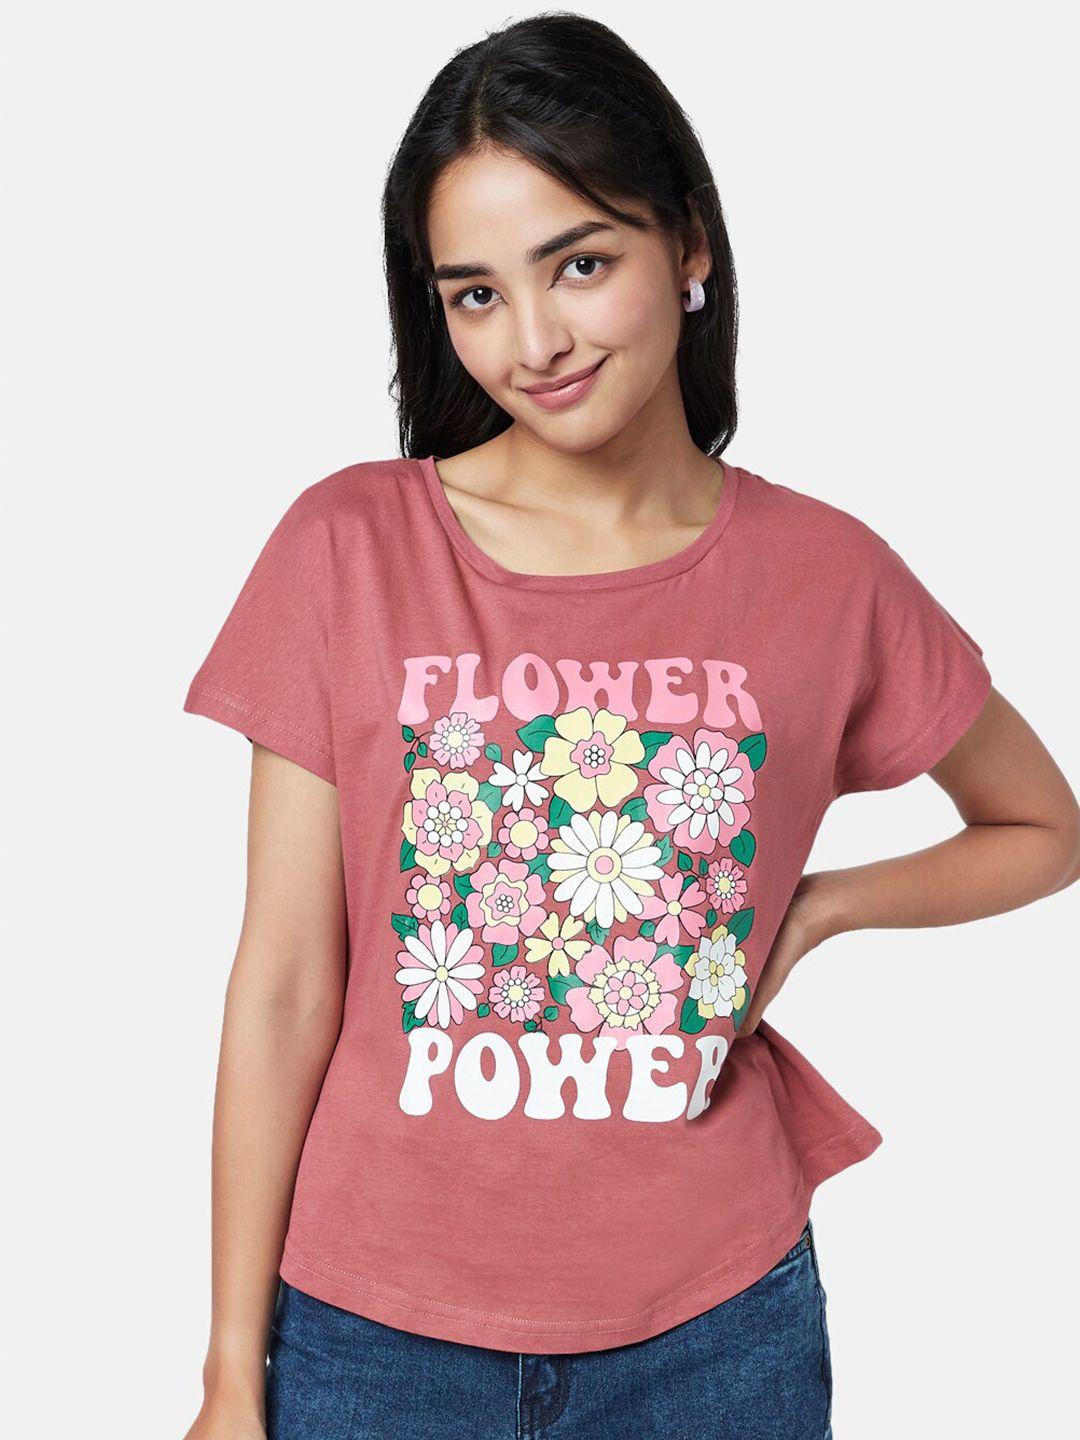 yu by pantaloons women floral printed cotton t-shirt